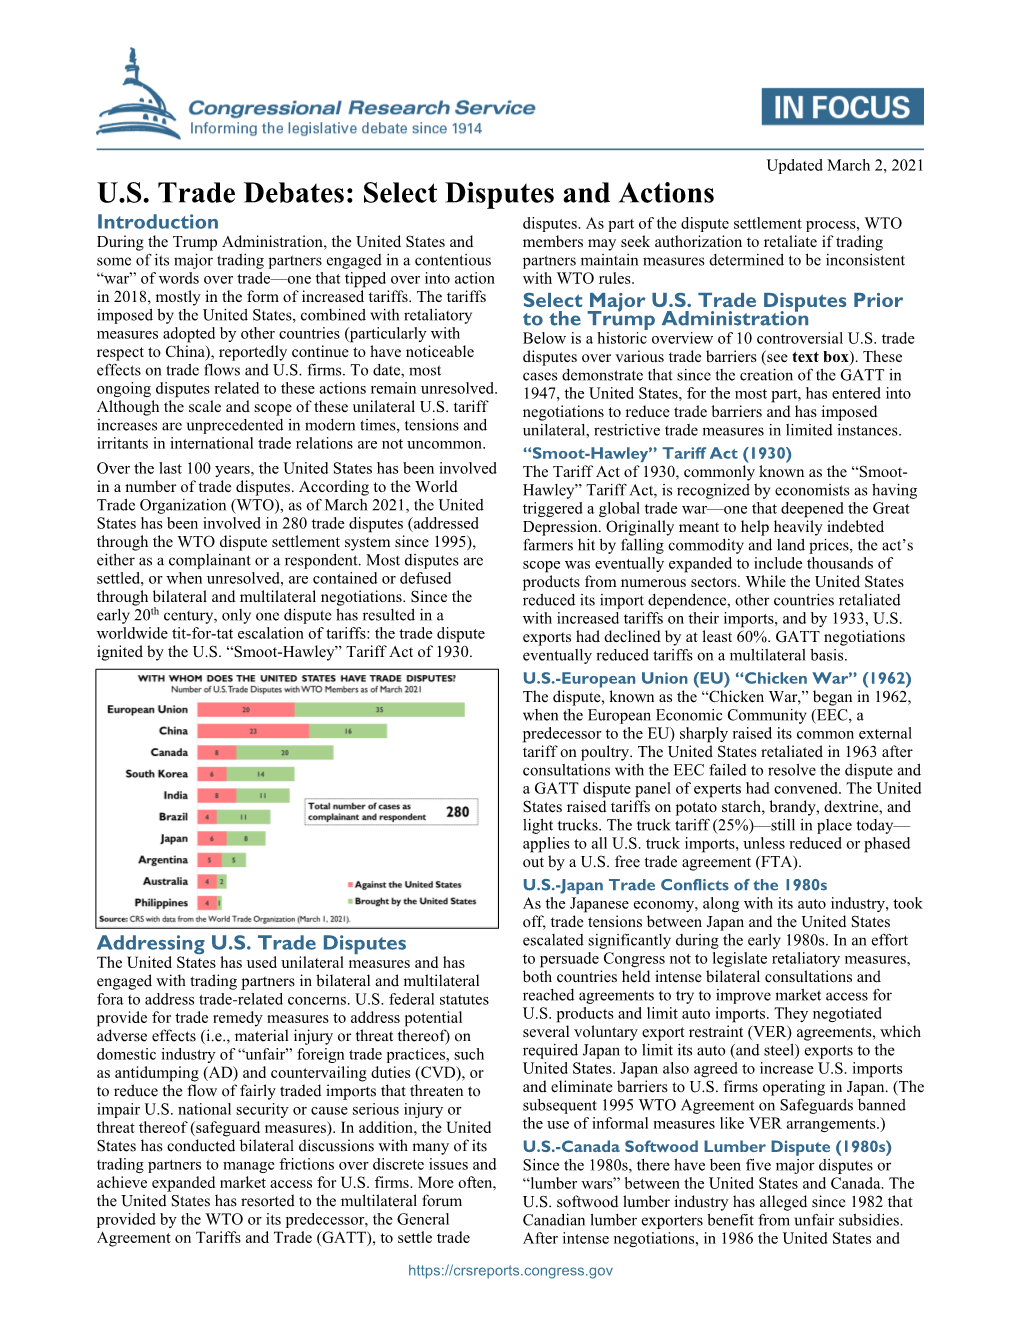 U.S. Trade Debates: Select Disputes and Actions Introduction Disputes